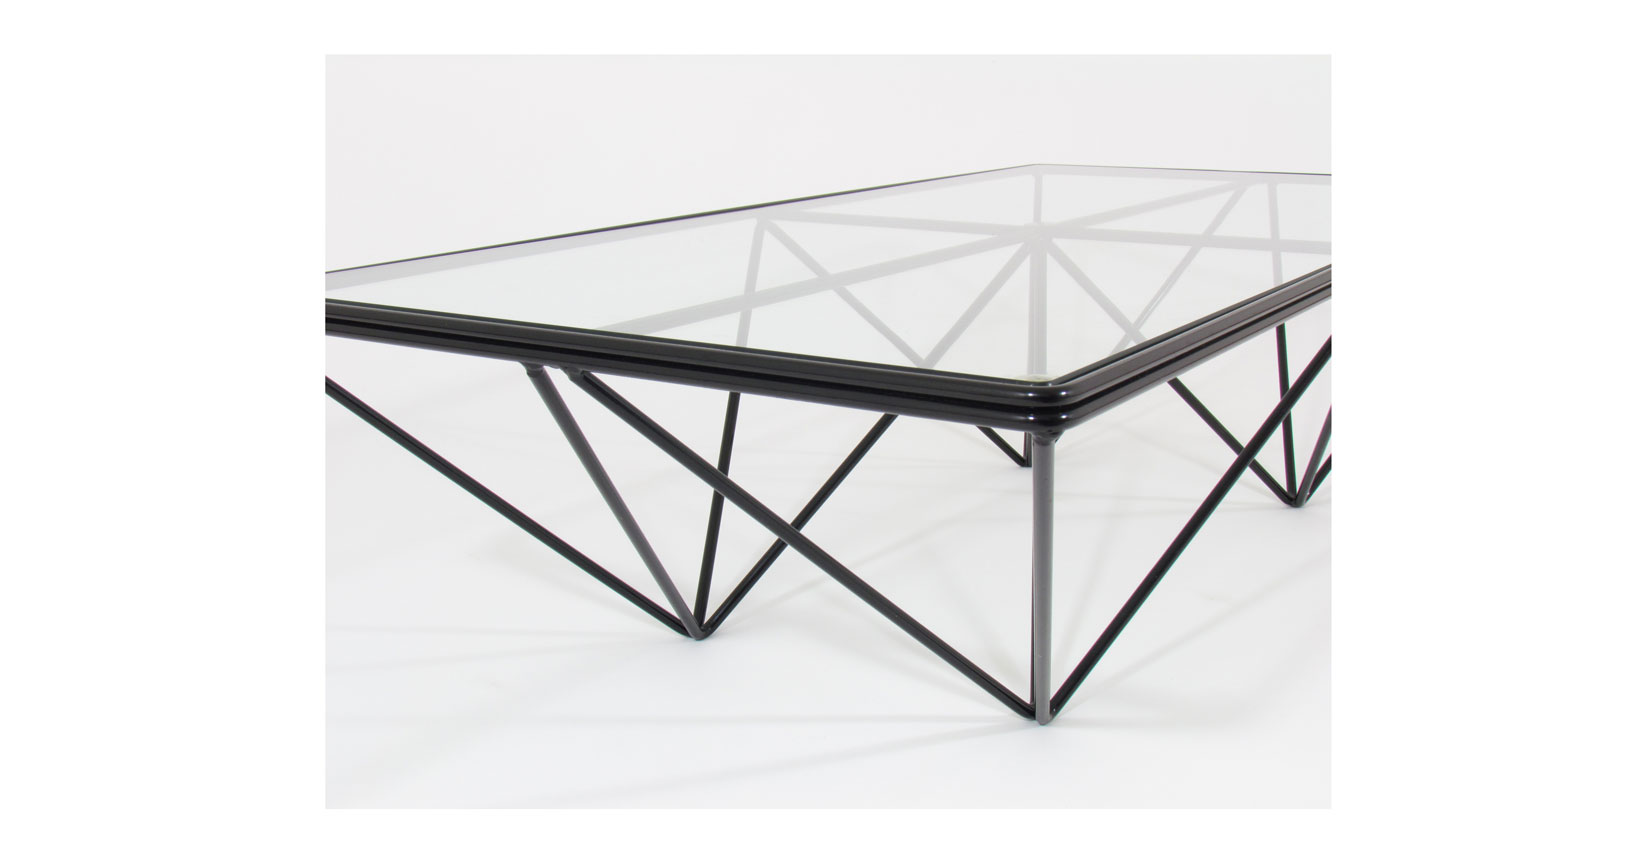 alanda paolo piva coffee table tavolo metal crystal cristallo metallo telaio